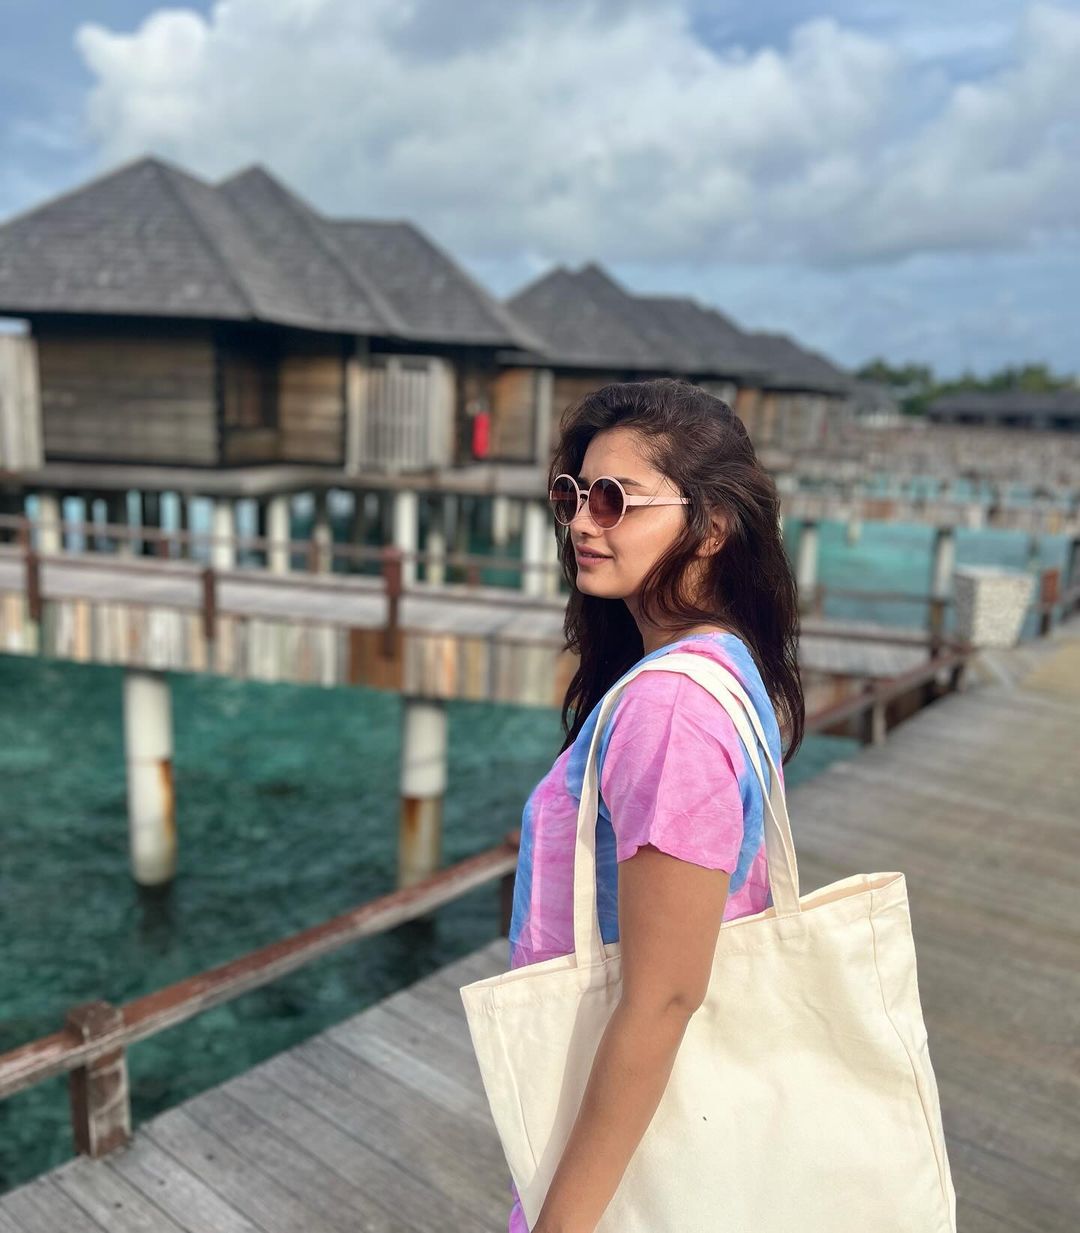 Hruta Durgule Prateek Shah Maldives Vacation